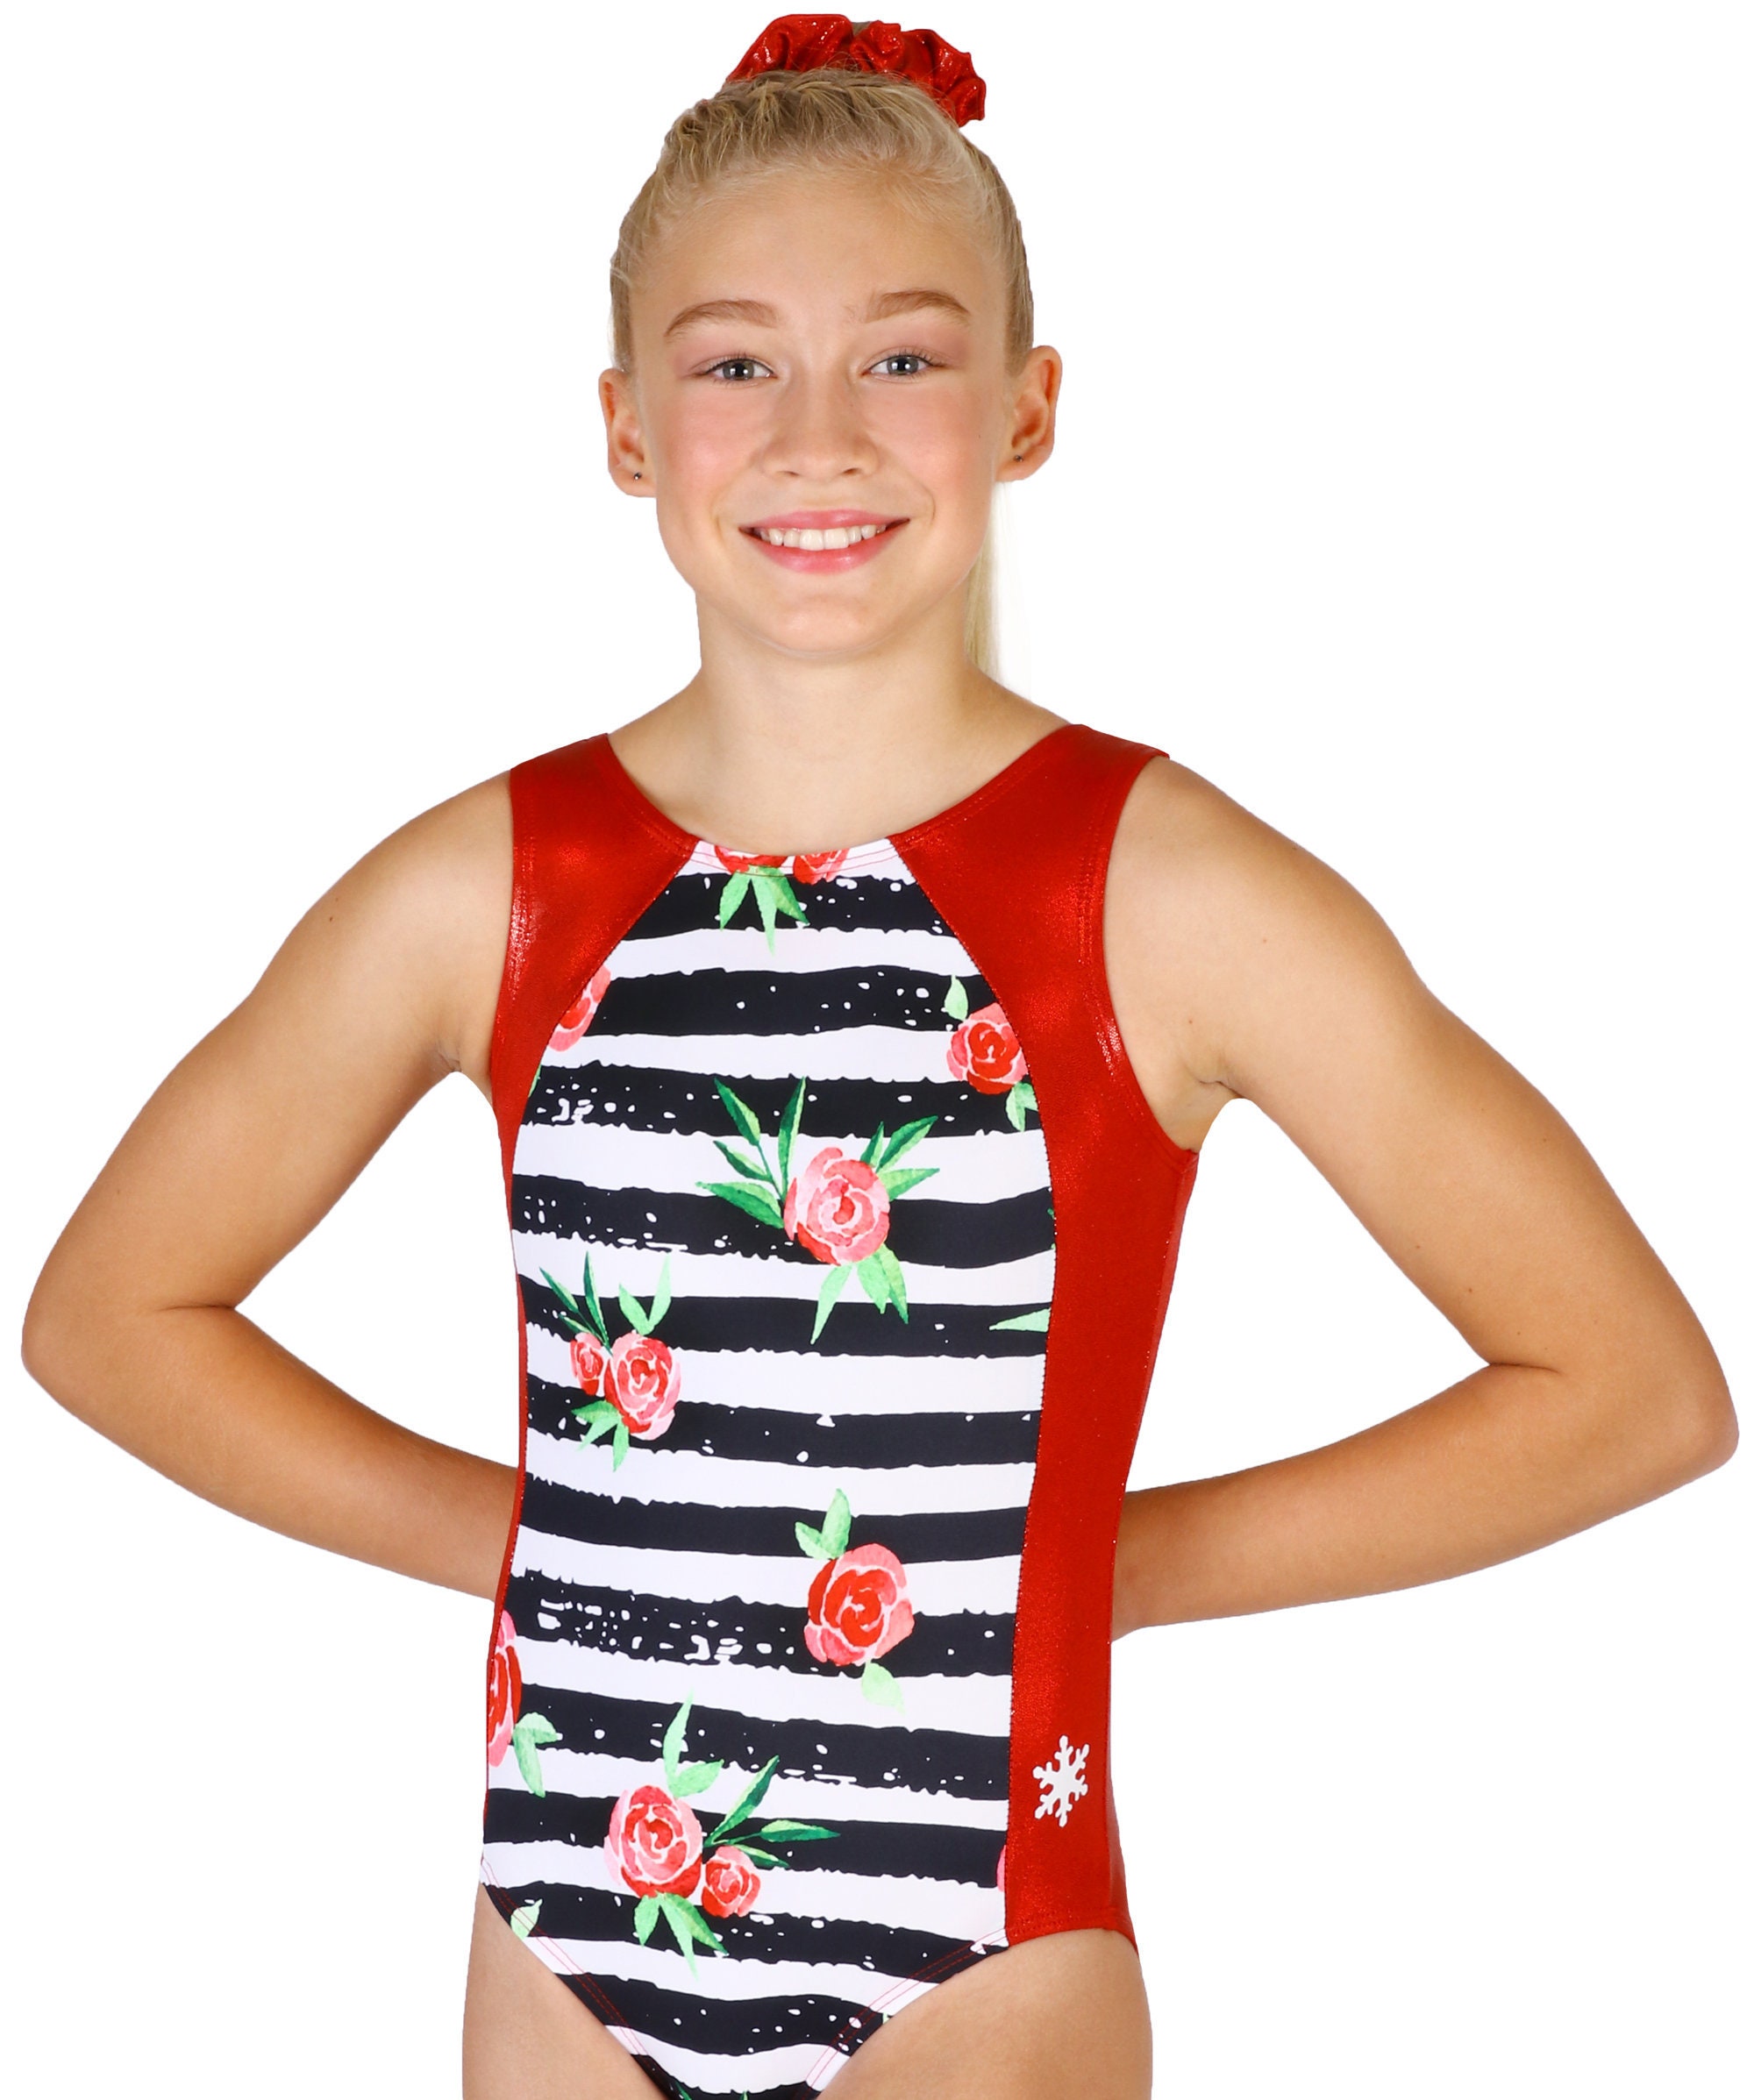 Red and White Vertical Stripe Swimsuit Bodysuit Swimwear 